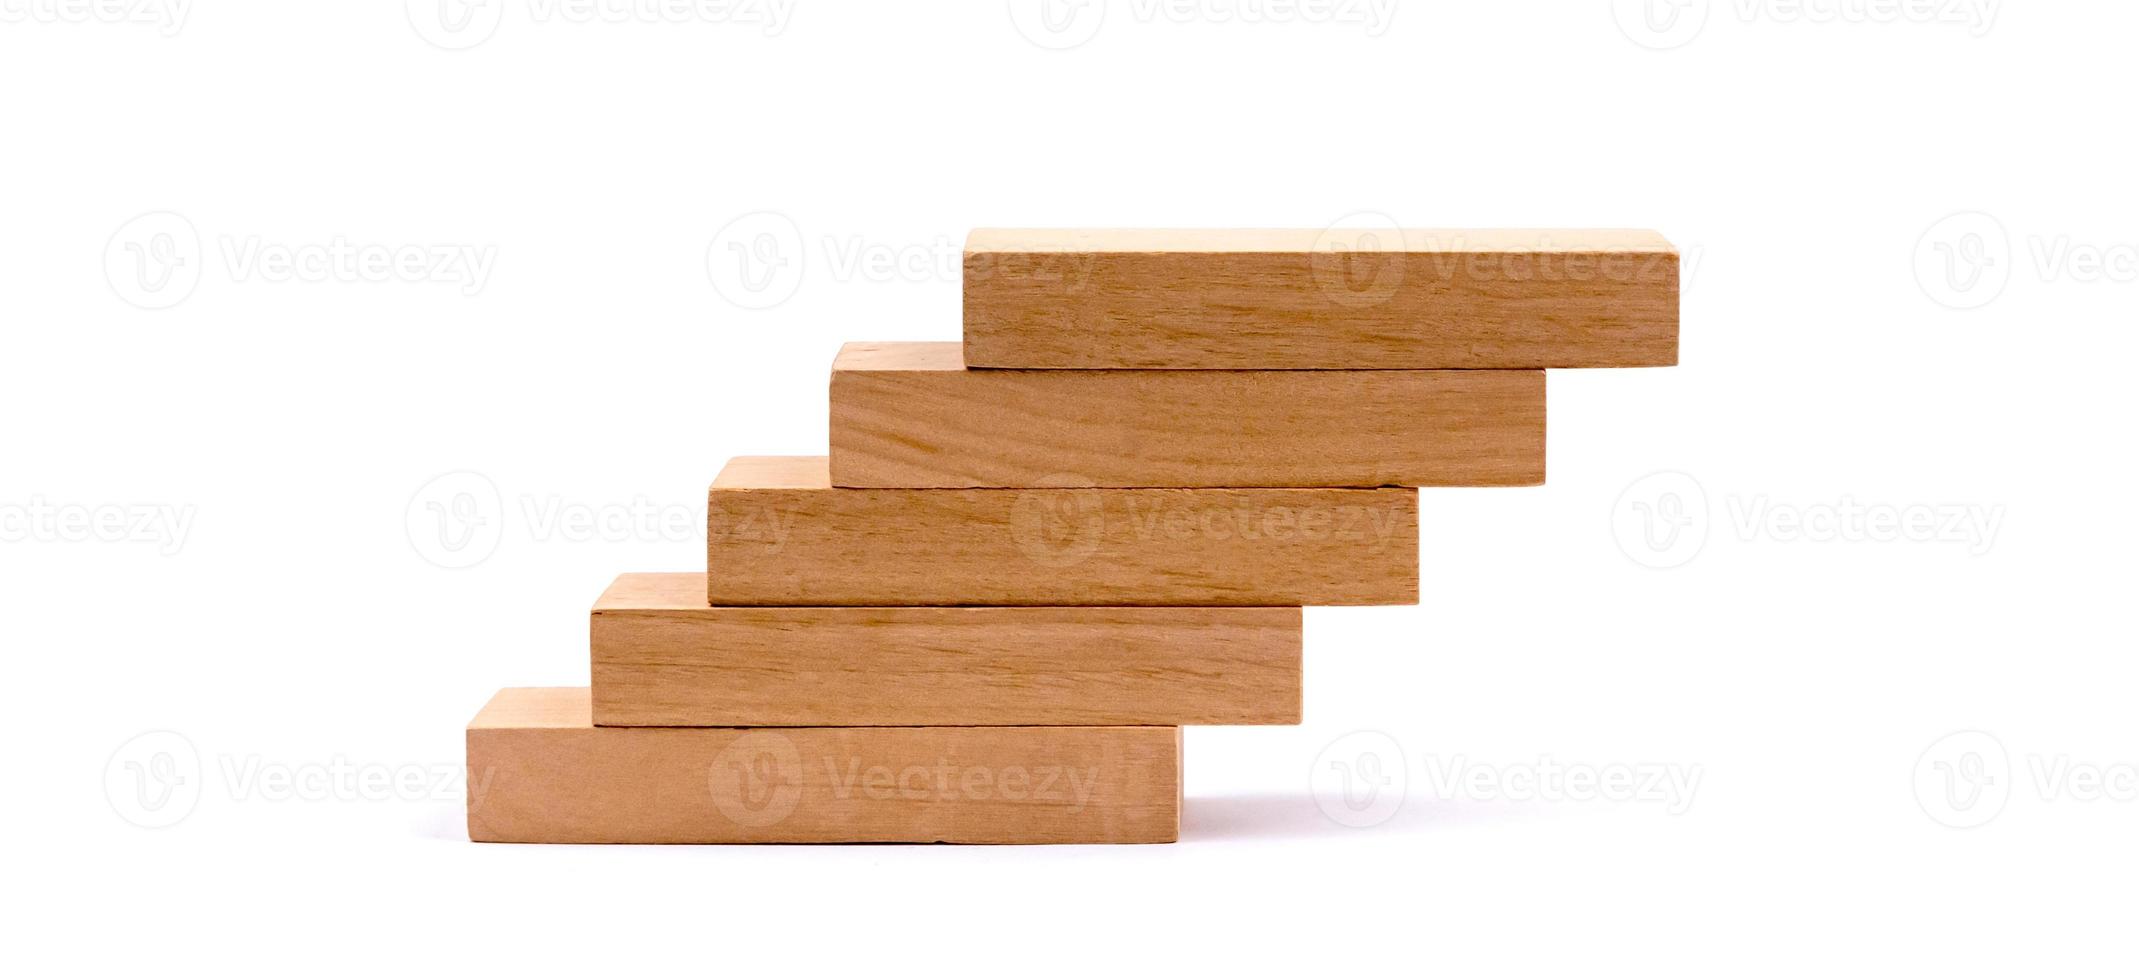 houtblok stapelen als staptrap op witte achtergrond foto